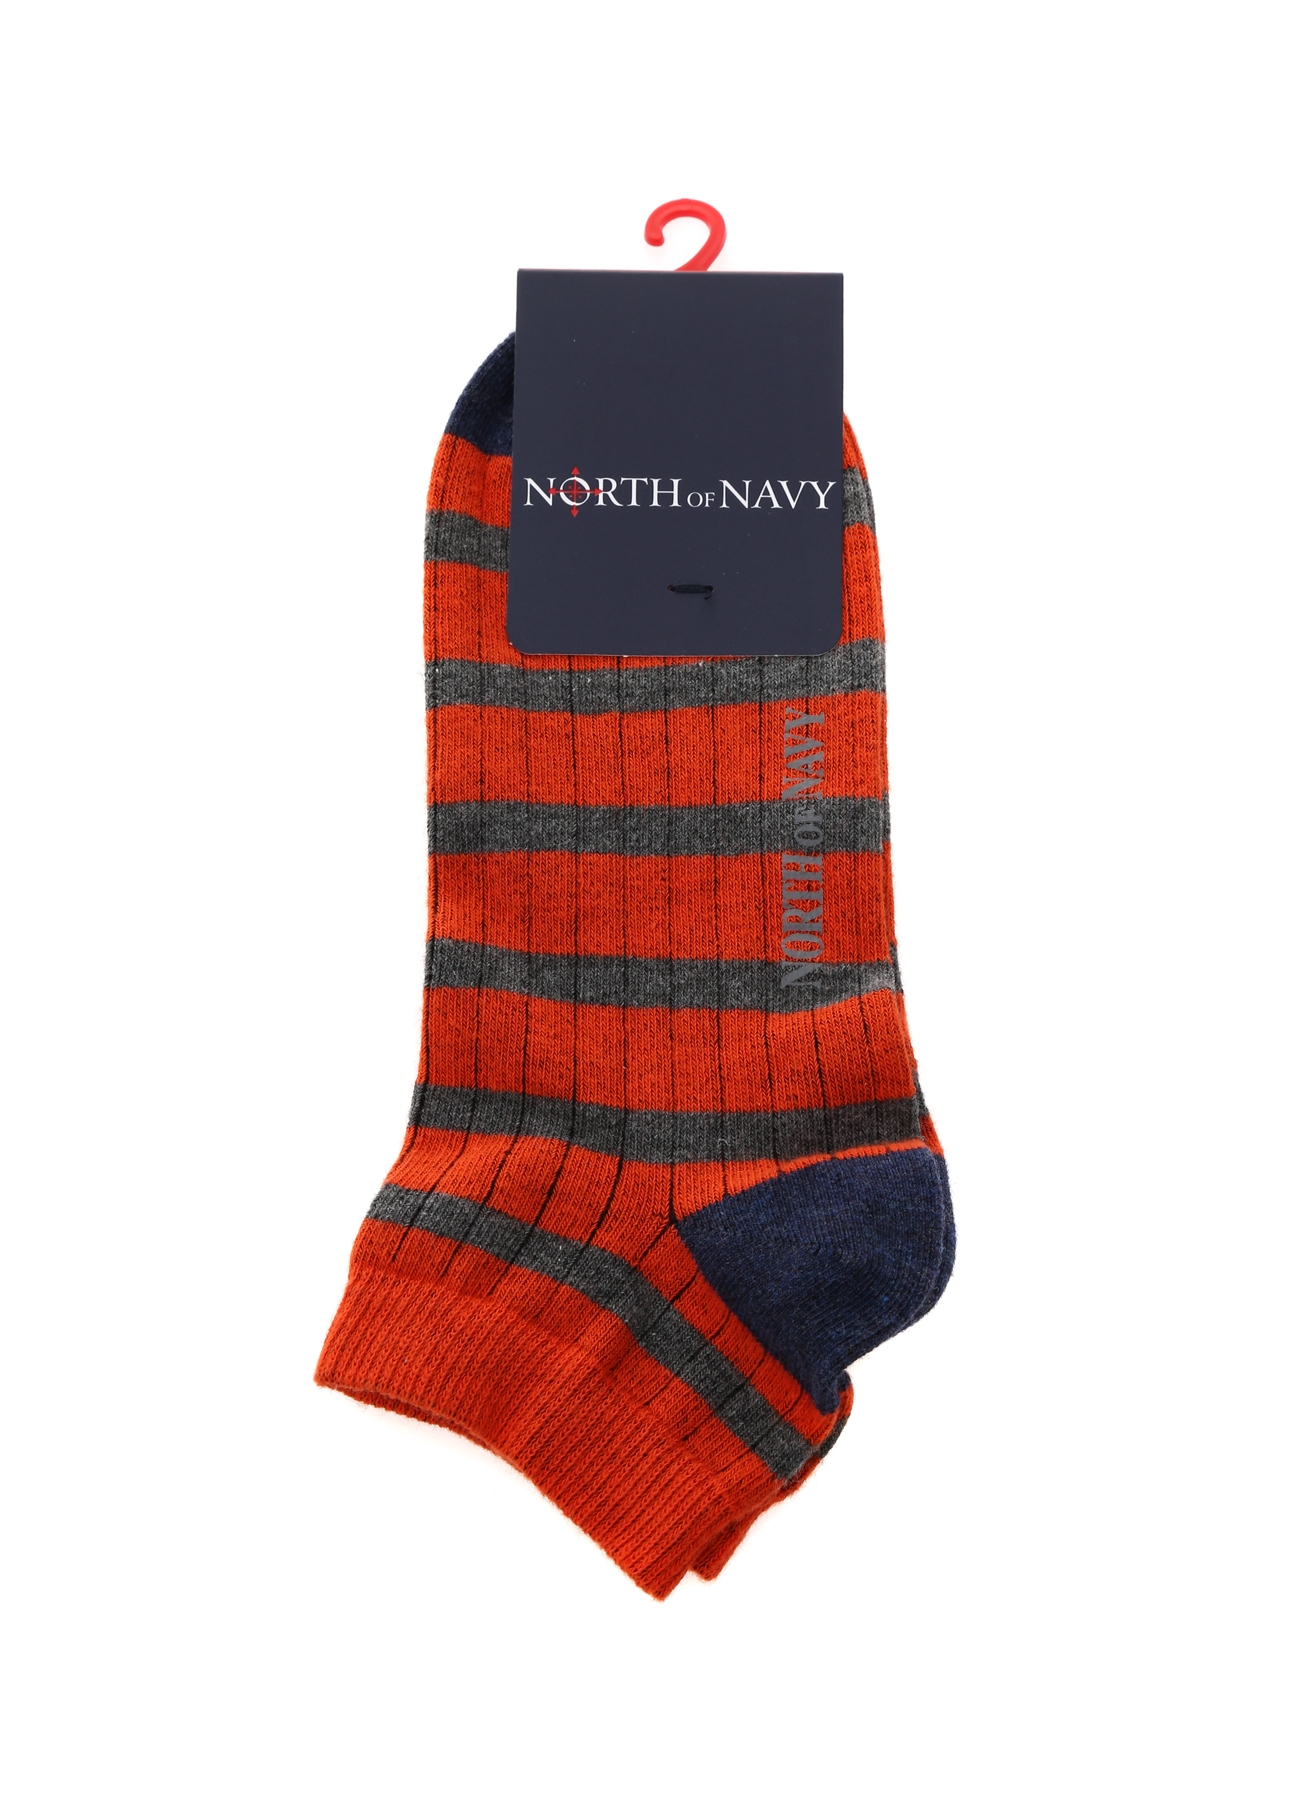 North Of Navy Çizgili Renkli Çorap 40-44 5000206629001 Ürün Resmi